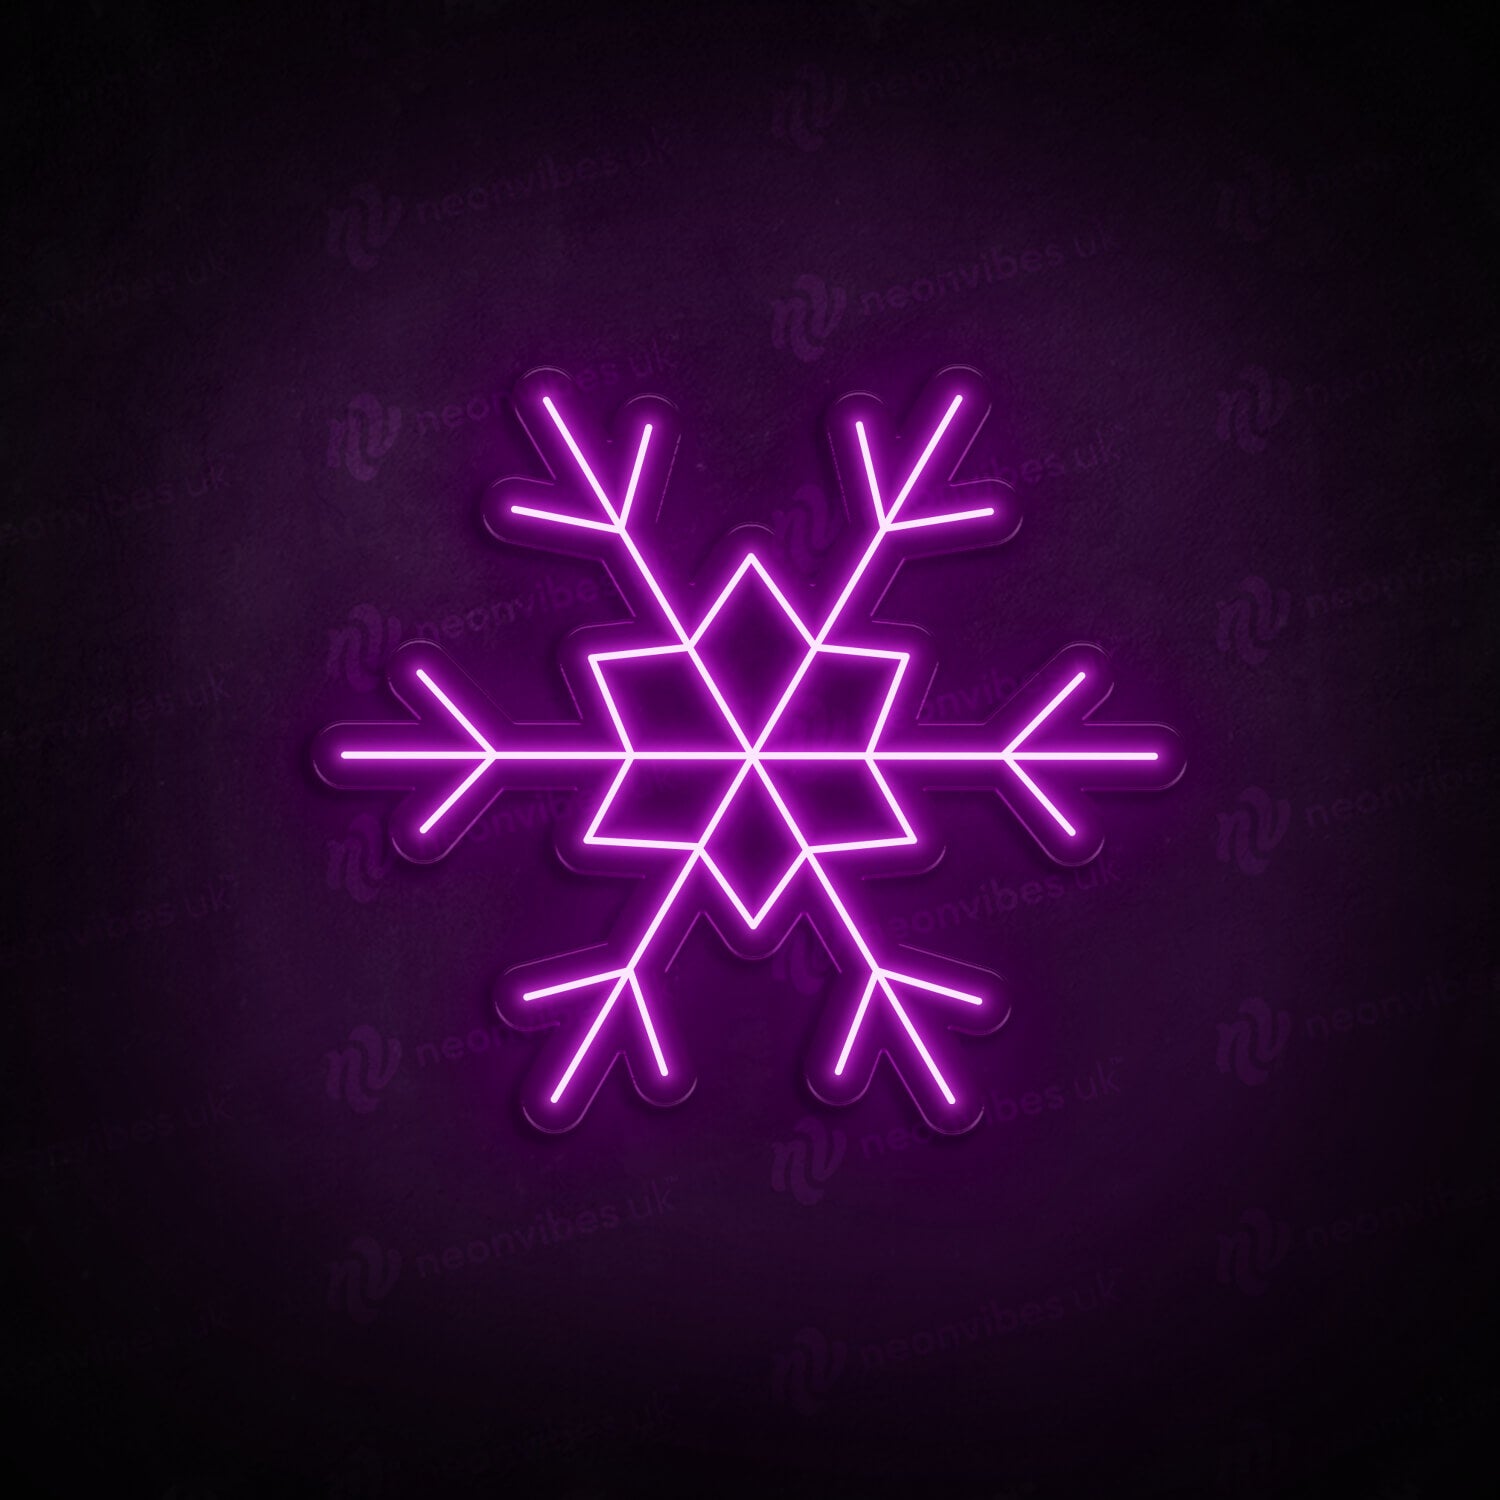 Snowflake neon sign